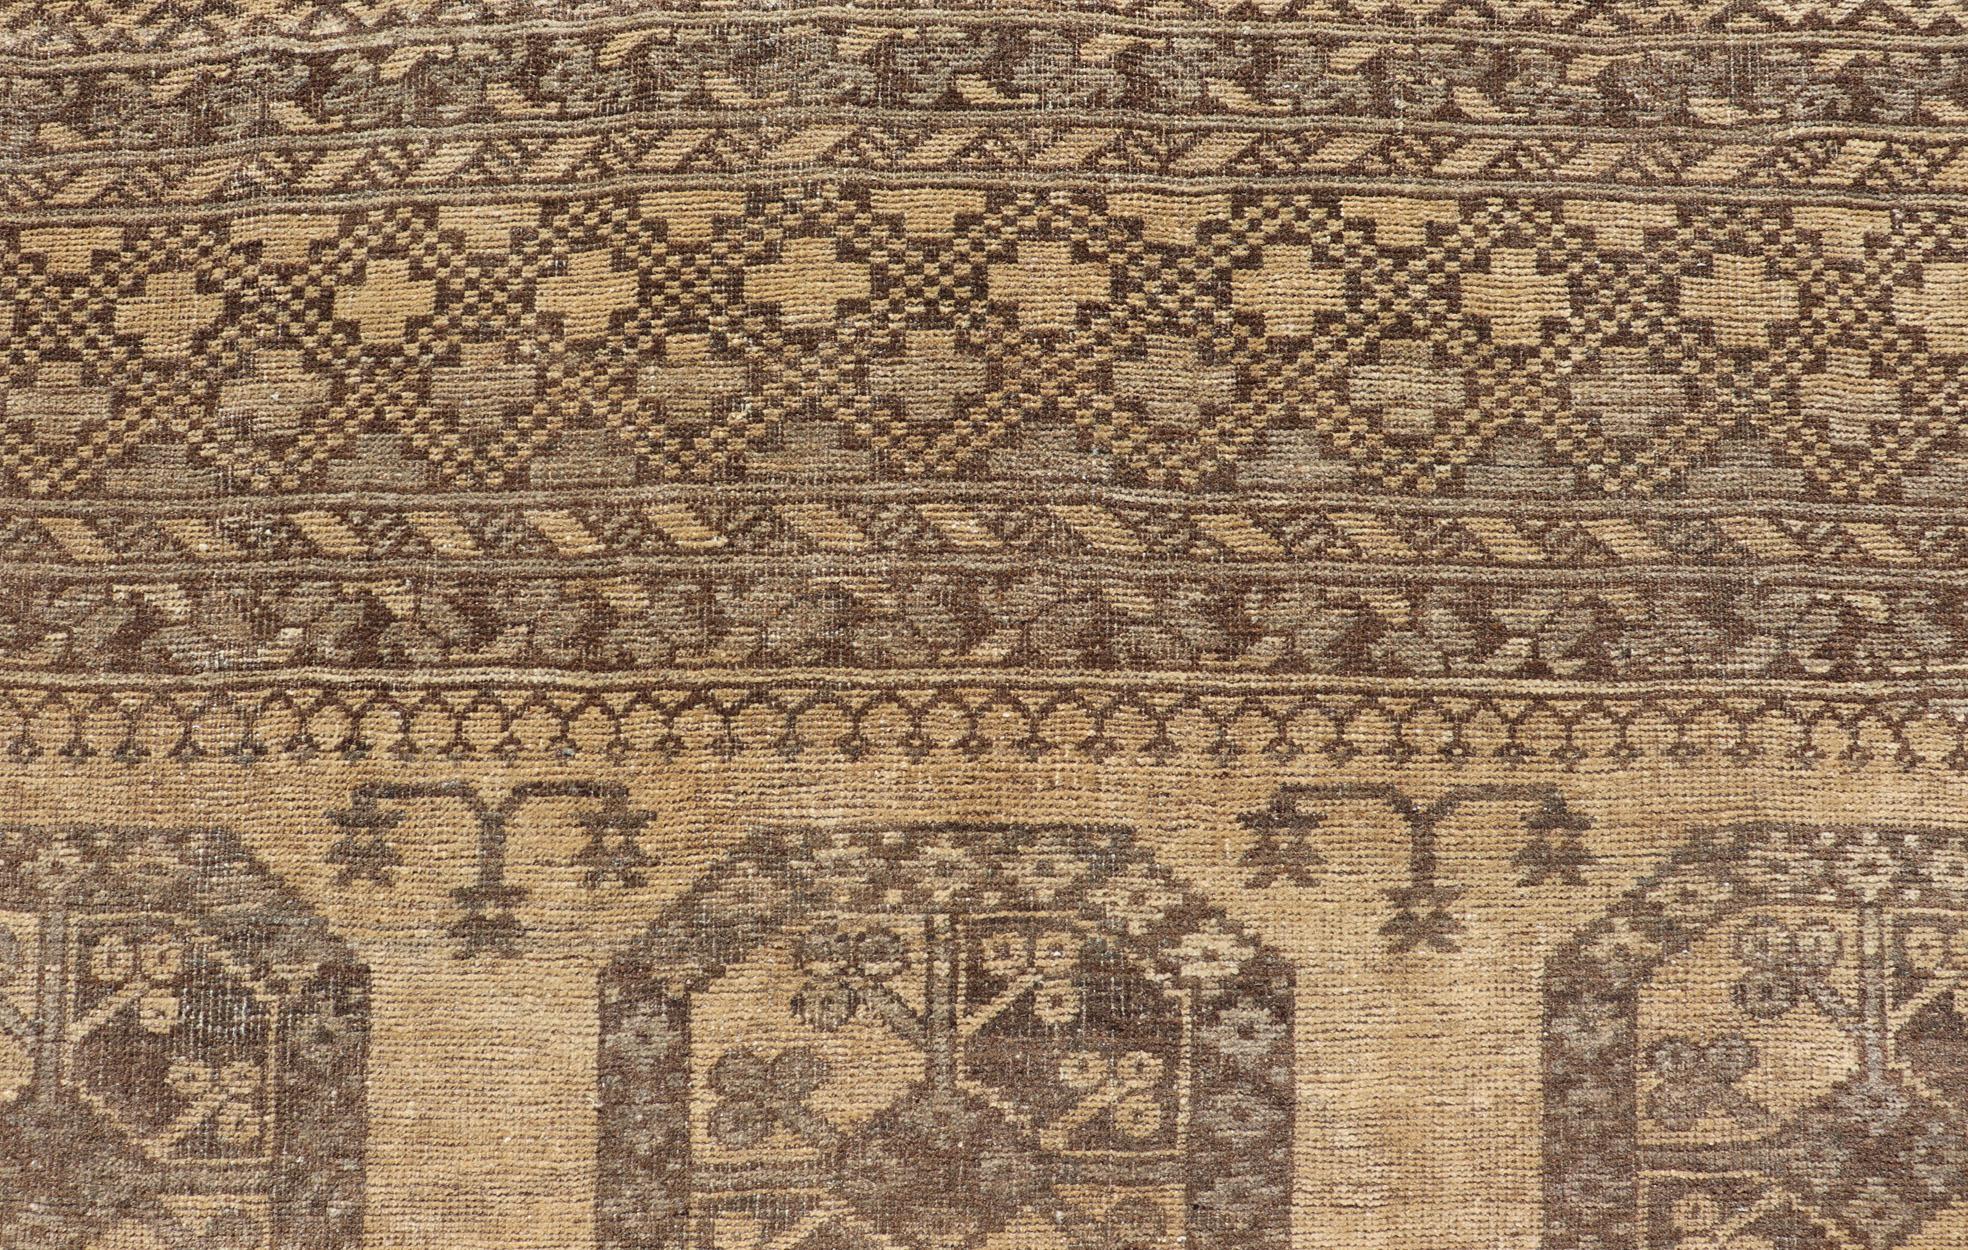 Vintage Turkomen Ersari Rug with Gul Design in Brown, Gray, Tan & Sand Colors For Sale 1